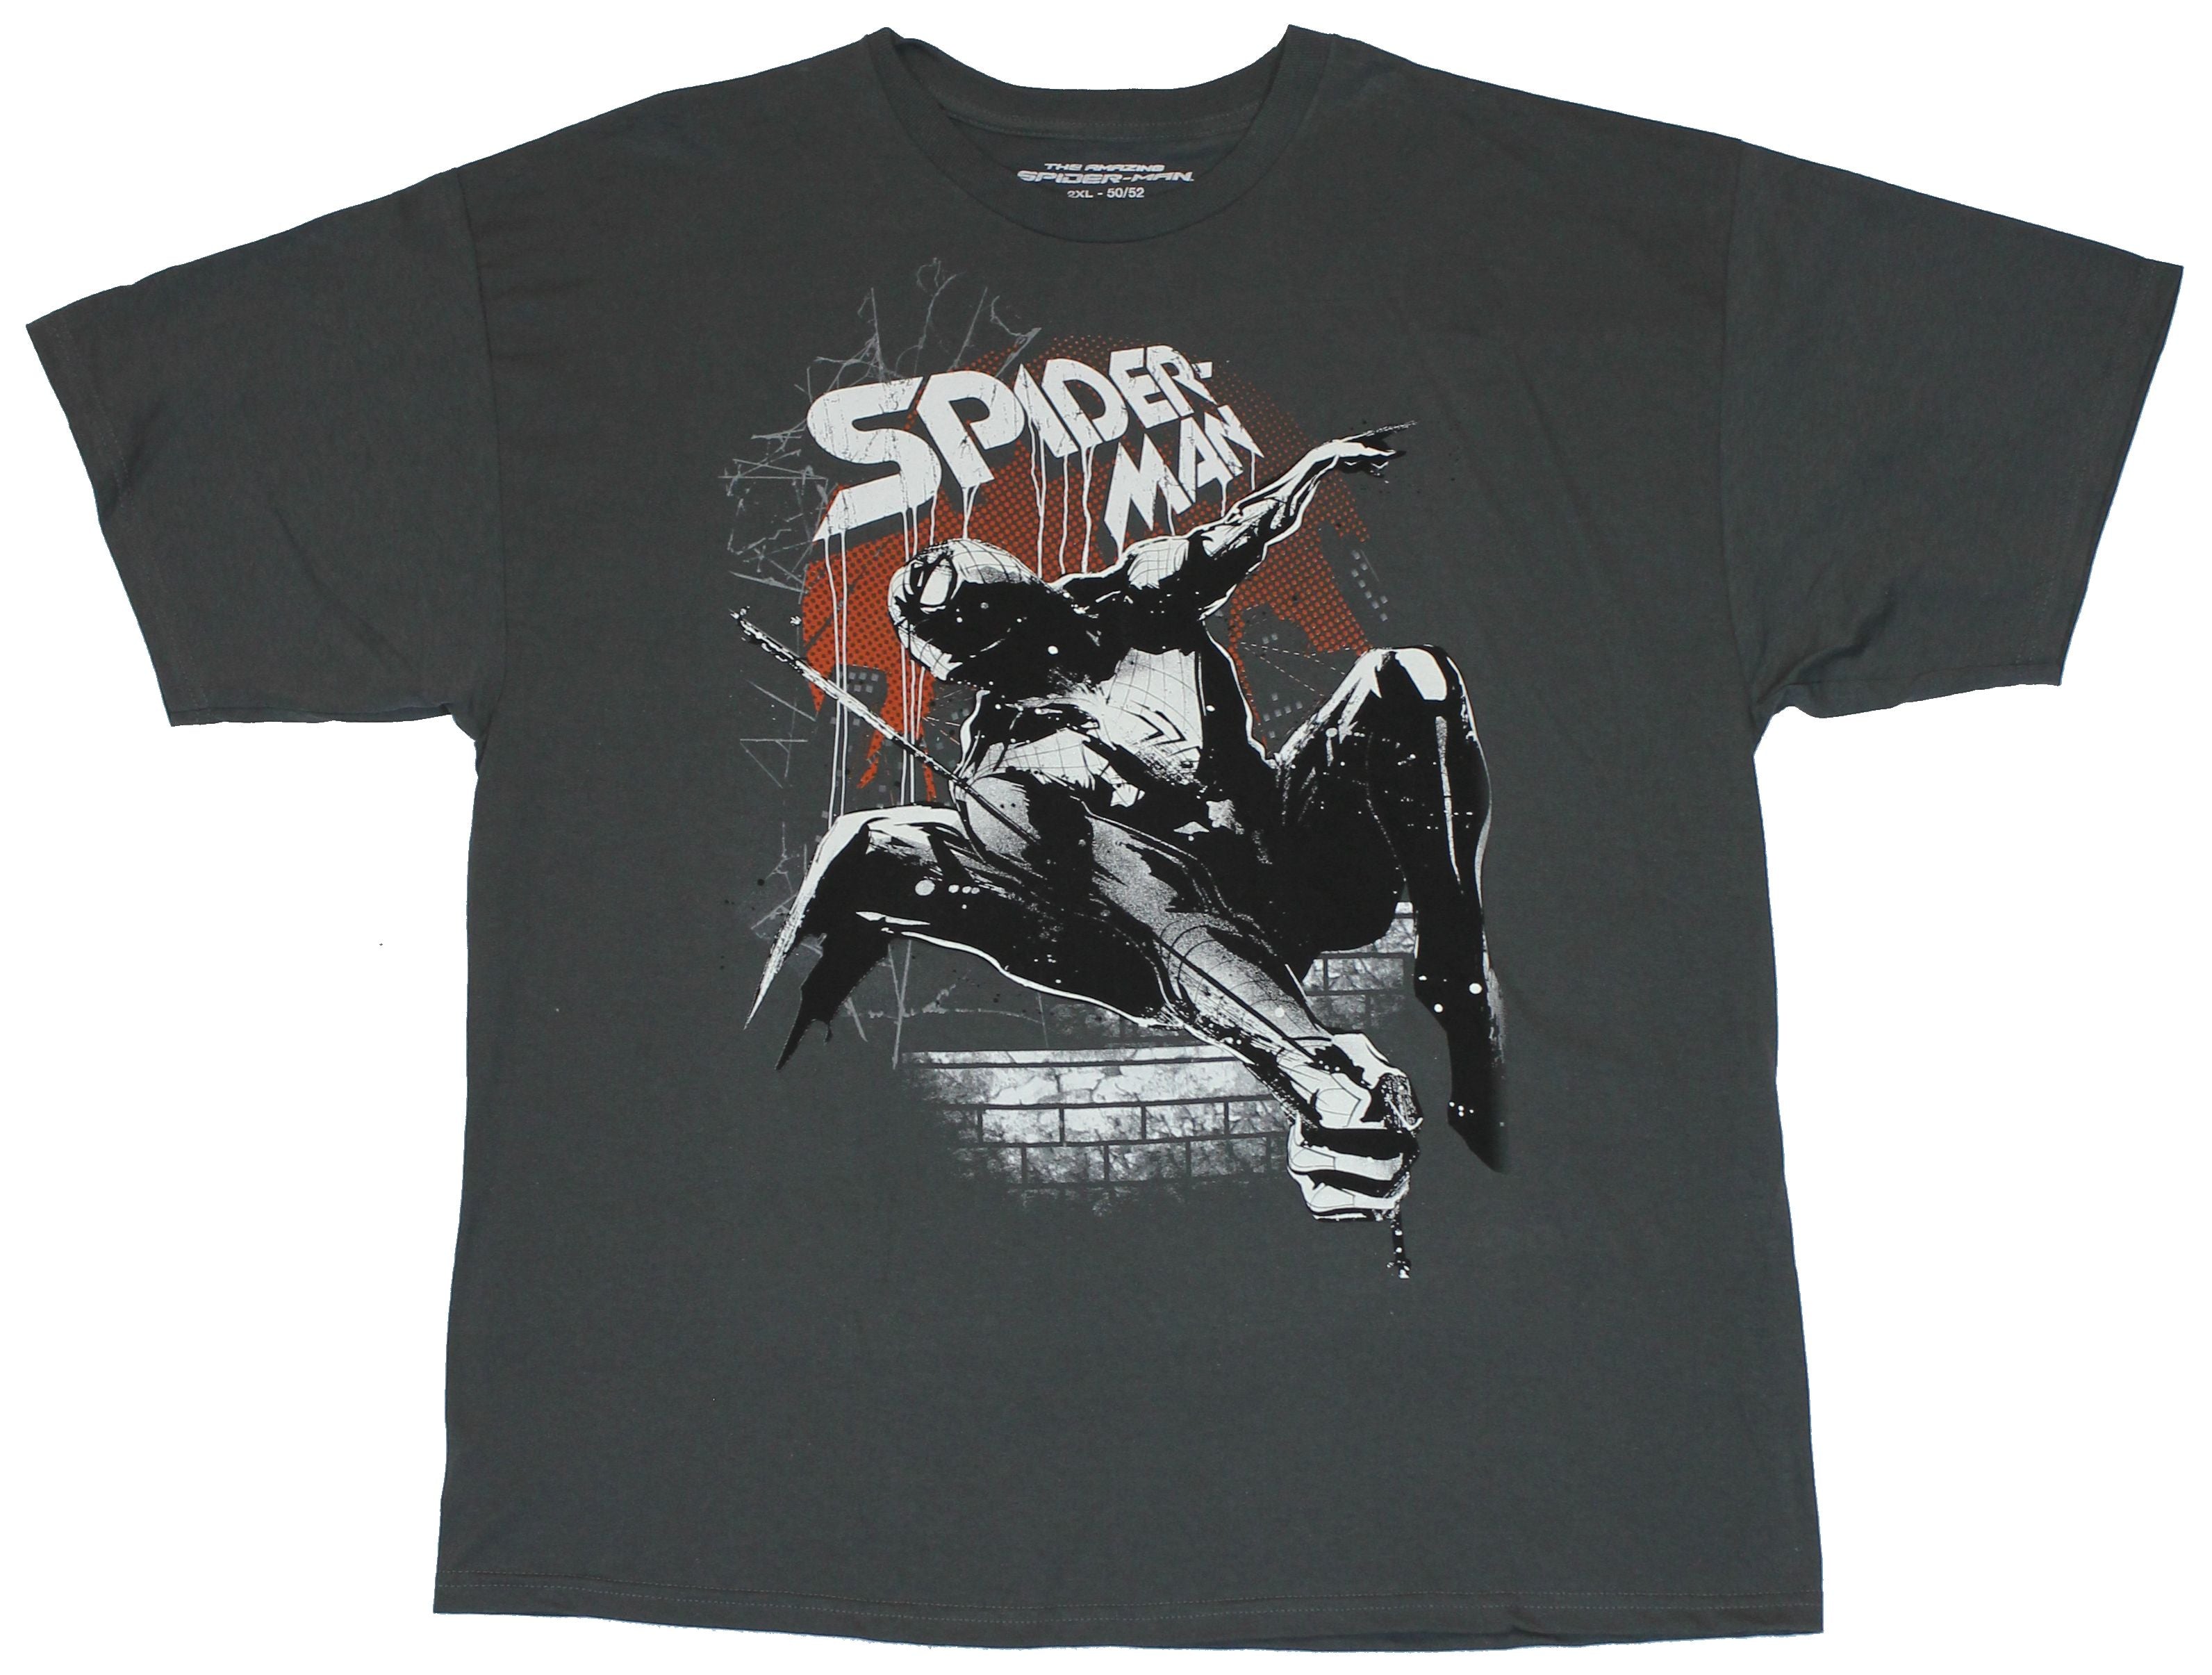 Spider-man Marvel Comics Mens T-Shirt - Amazing Swinging In Splatter Glowing Pic